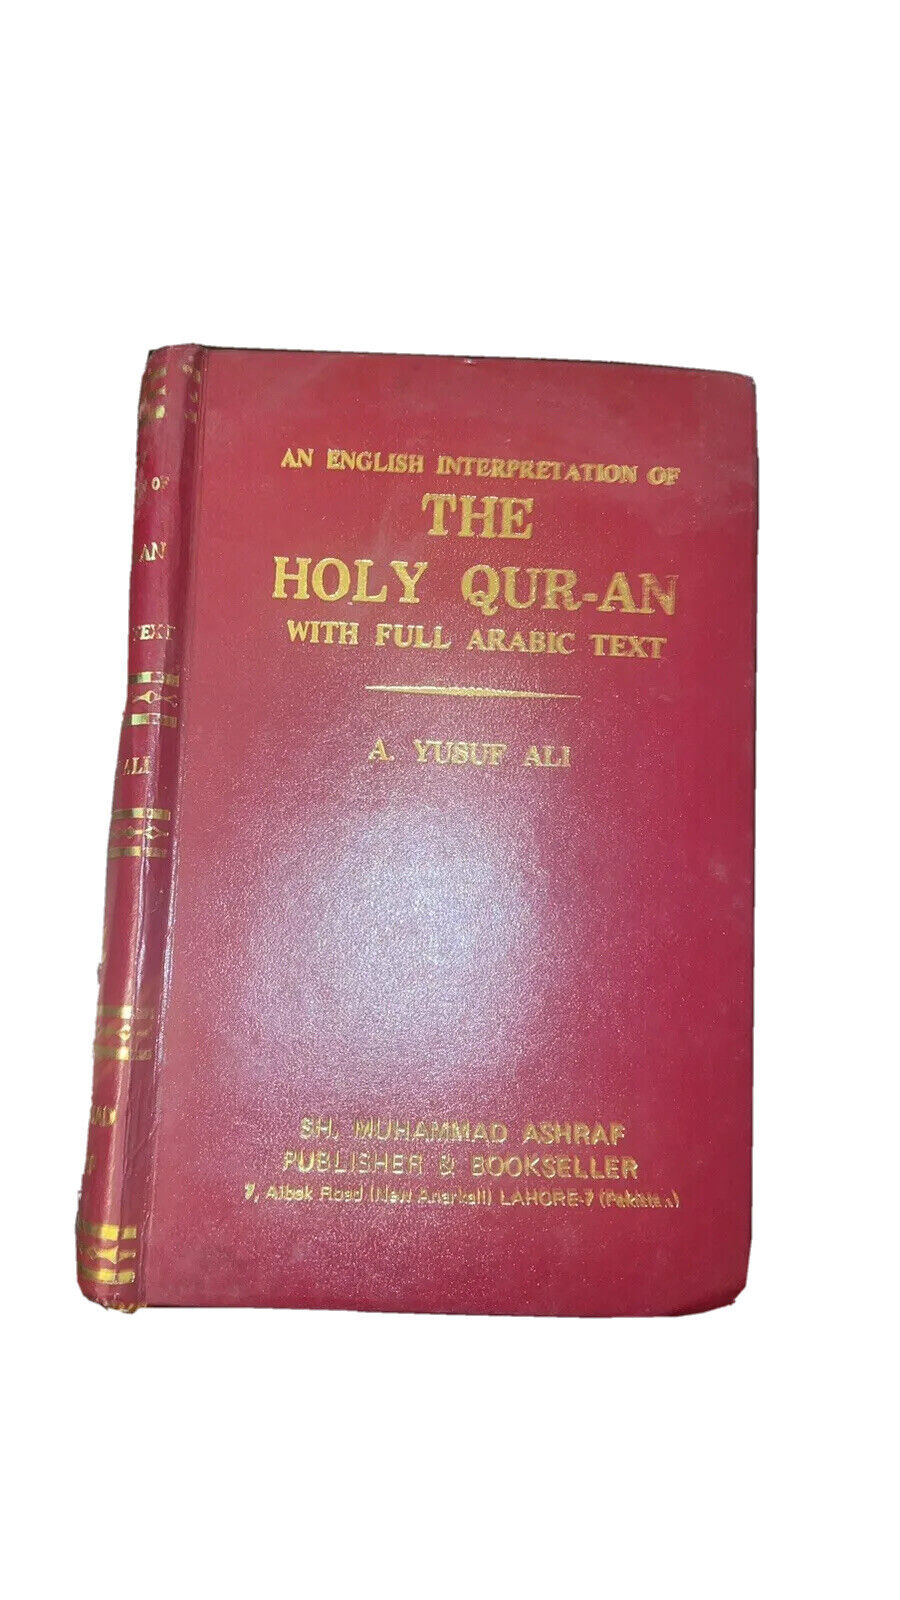 AN INTERPRETATION OF THE HOLY QURAN WITH  FULL ARABIC TEXT BY ABDULLAH YUSUF ALI